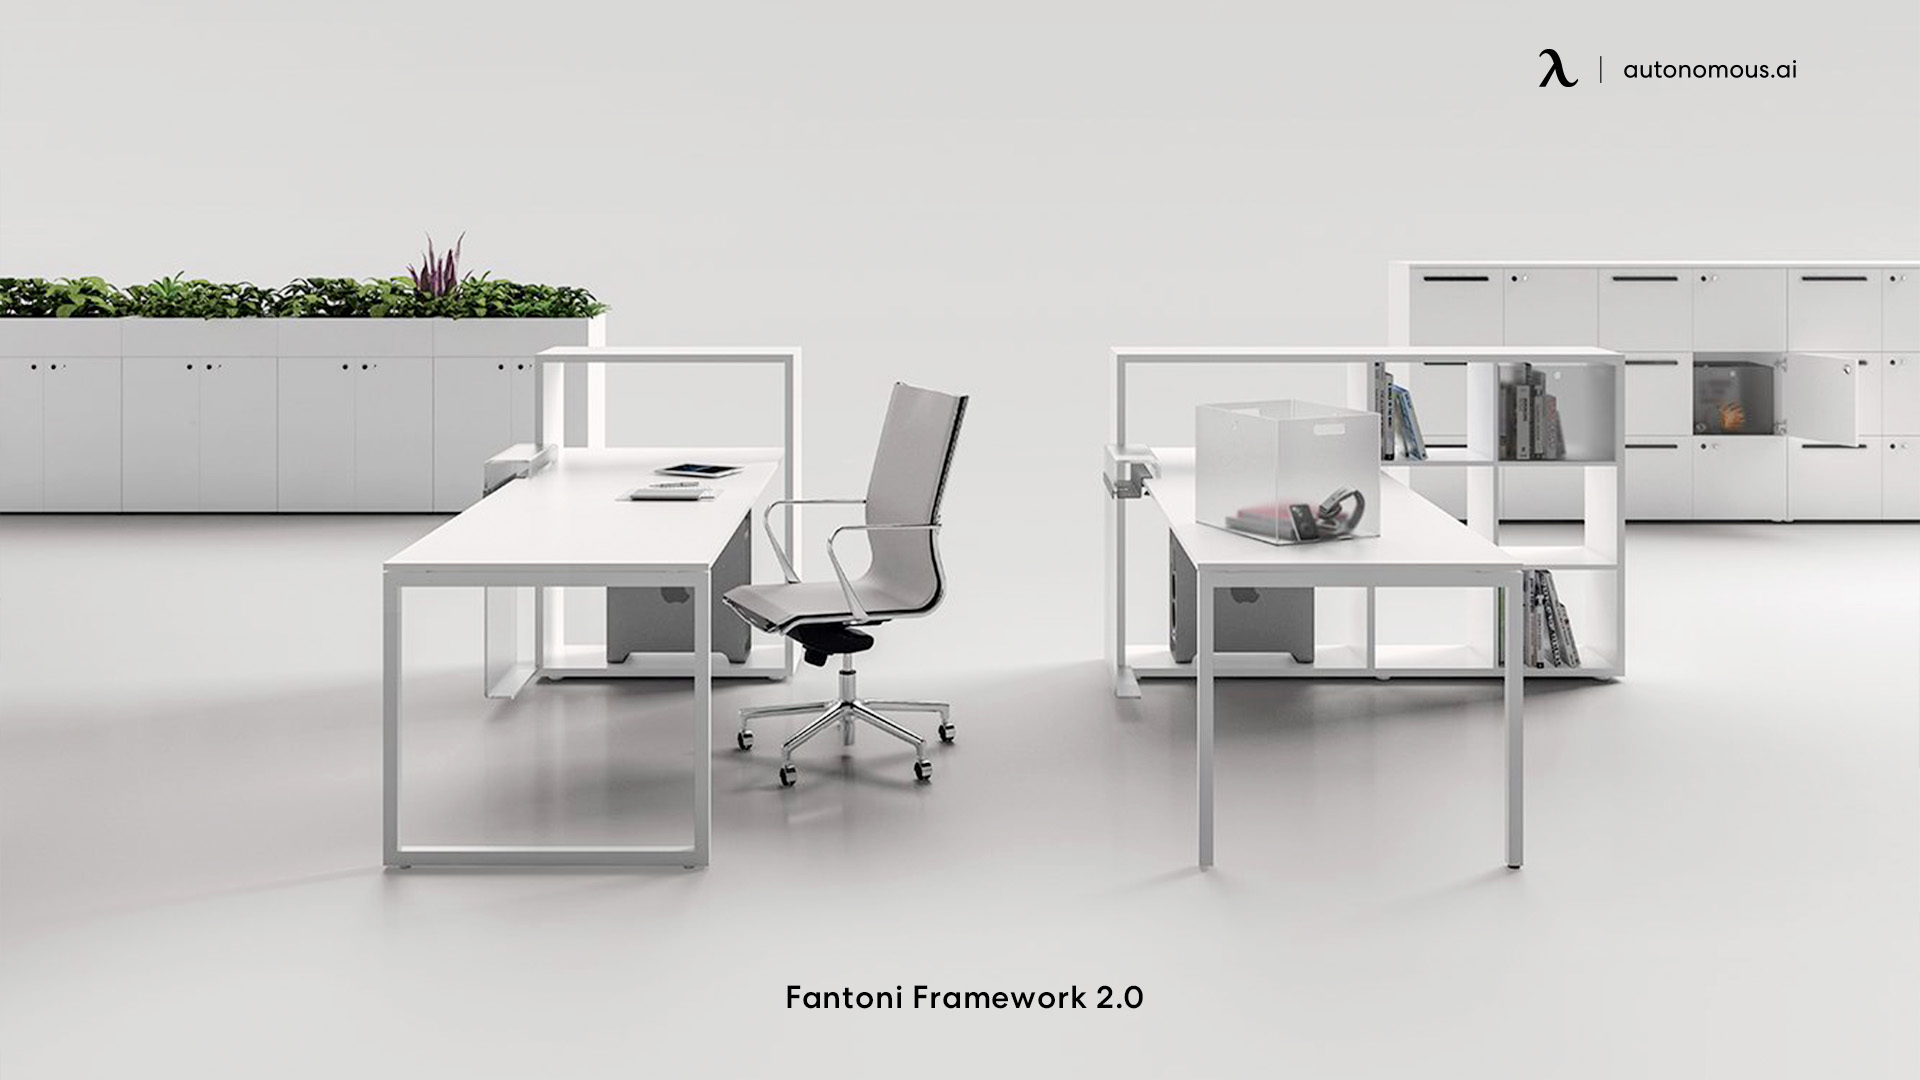 Fantoni Framework 2.0 home office desk design